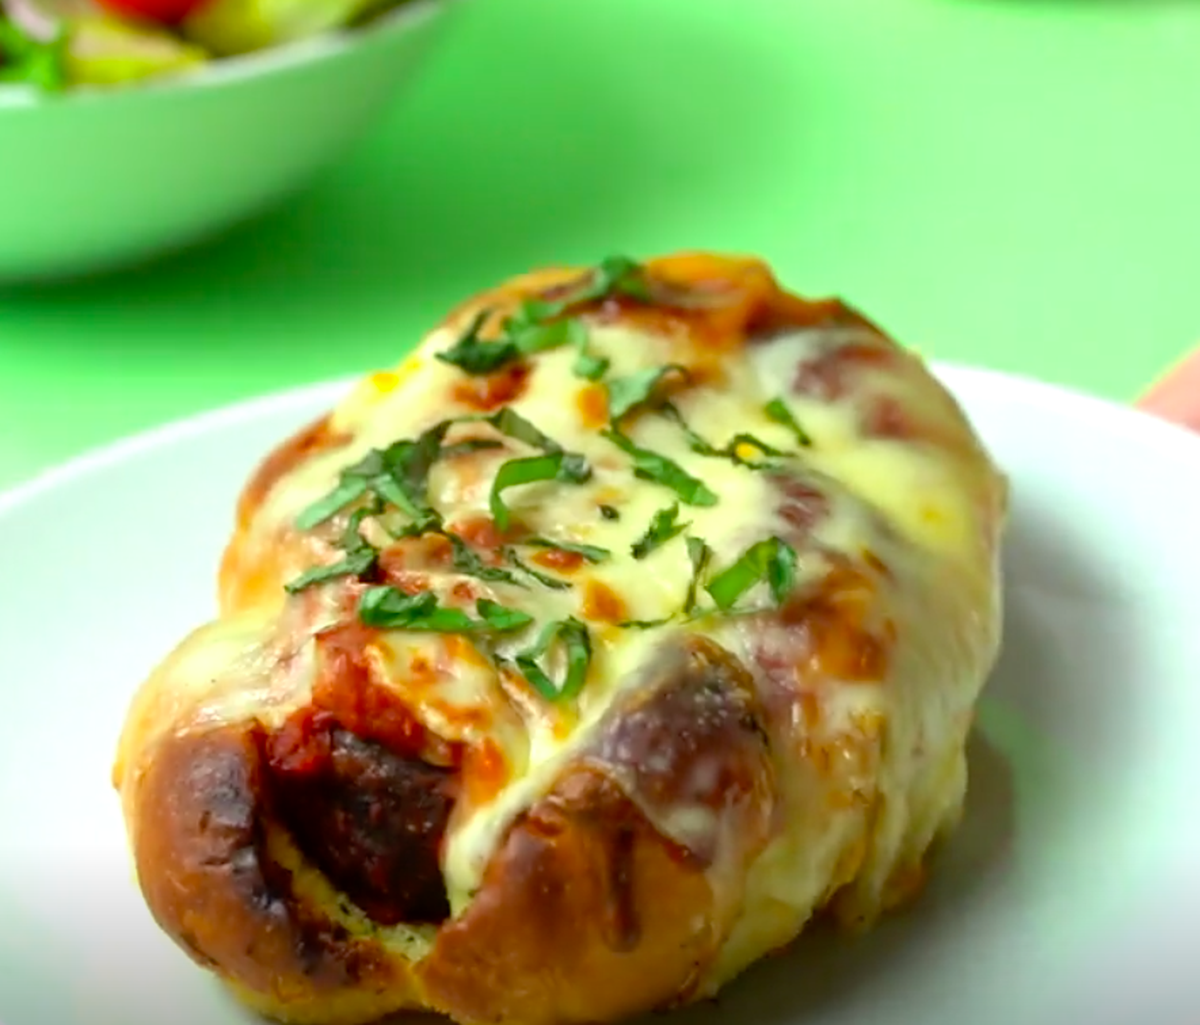 Vegetarian "Meatball" Sub with Garlic Bread Recipe